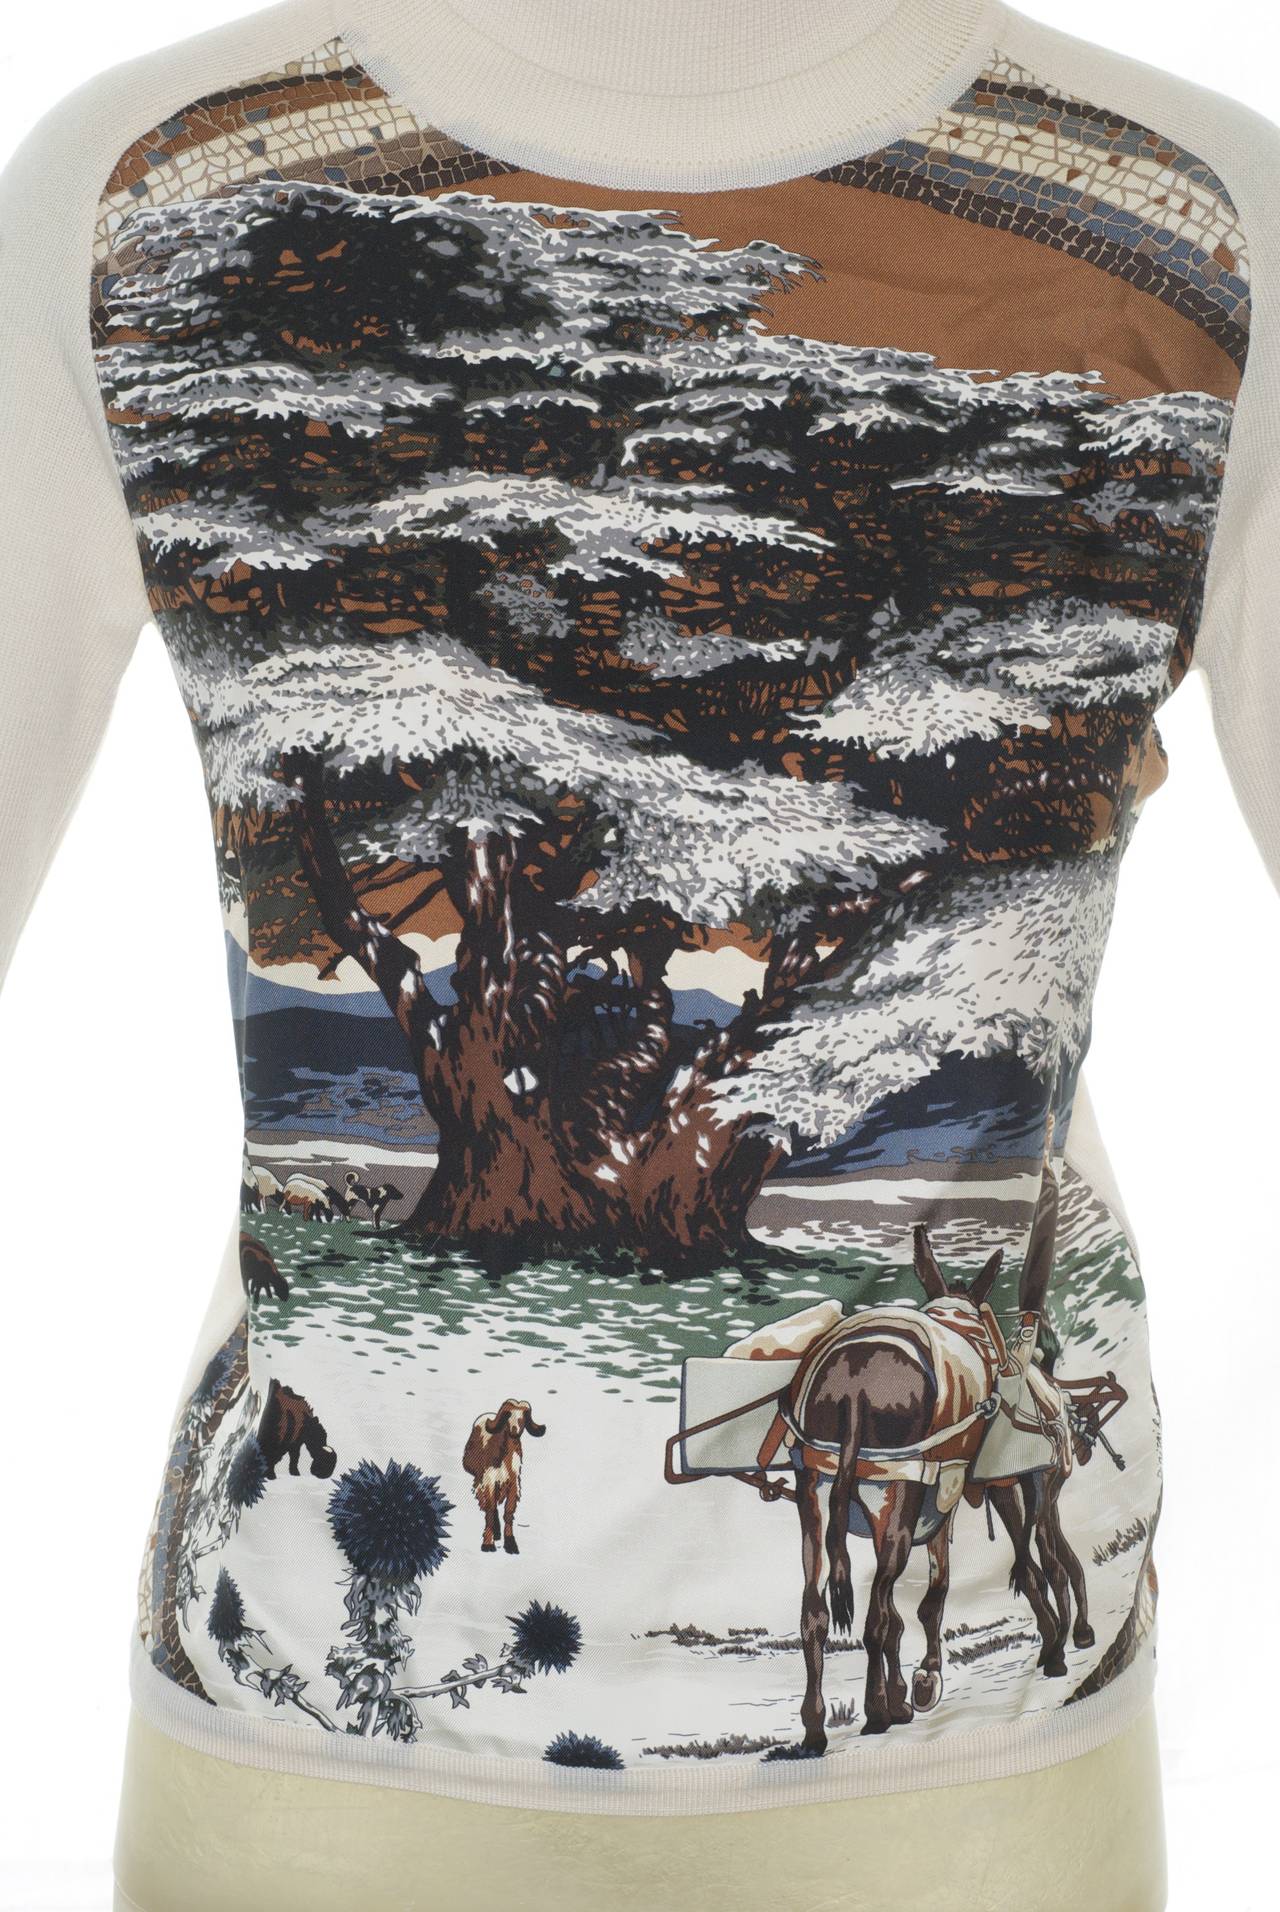 Hermes 'Winter Scene' Silk Sweater By Dimitri Rybaltchenko 1